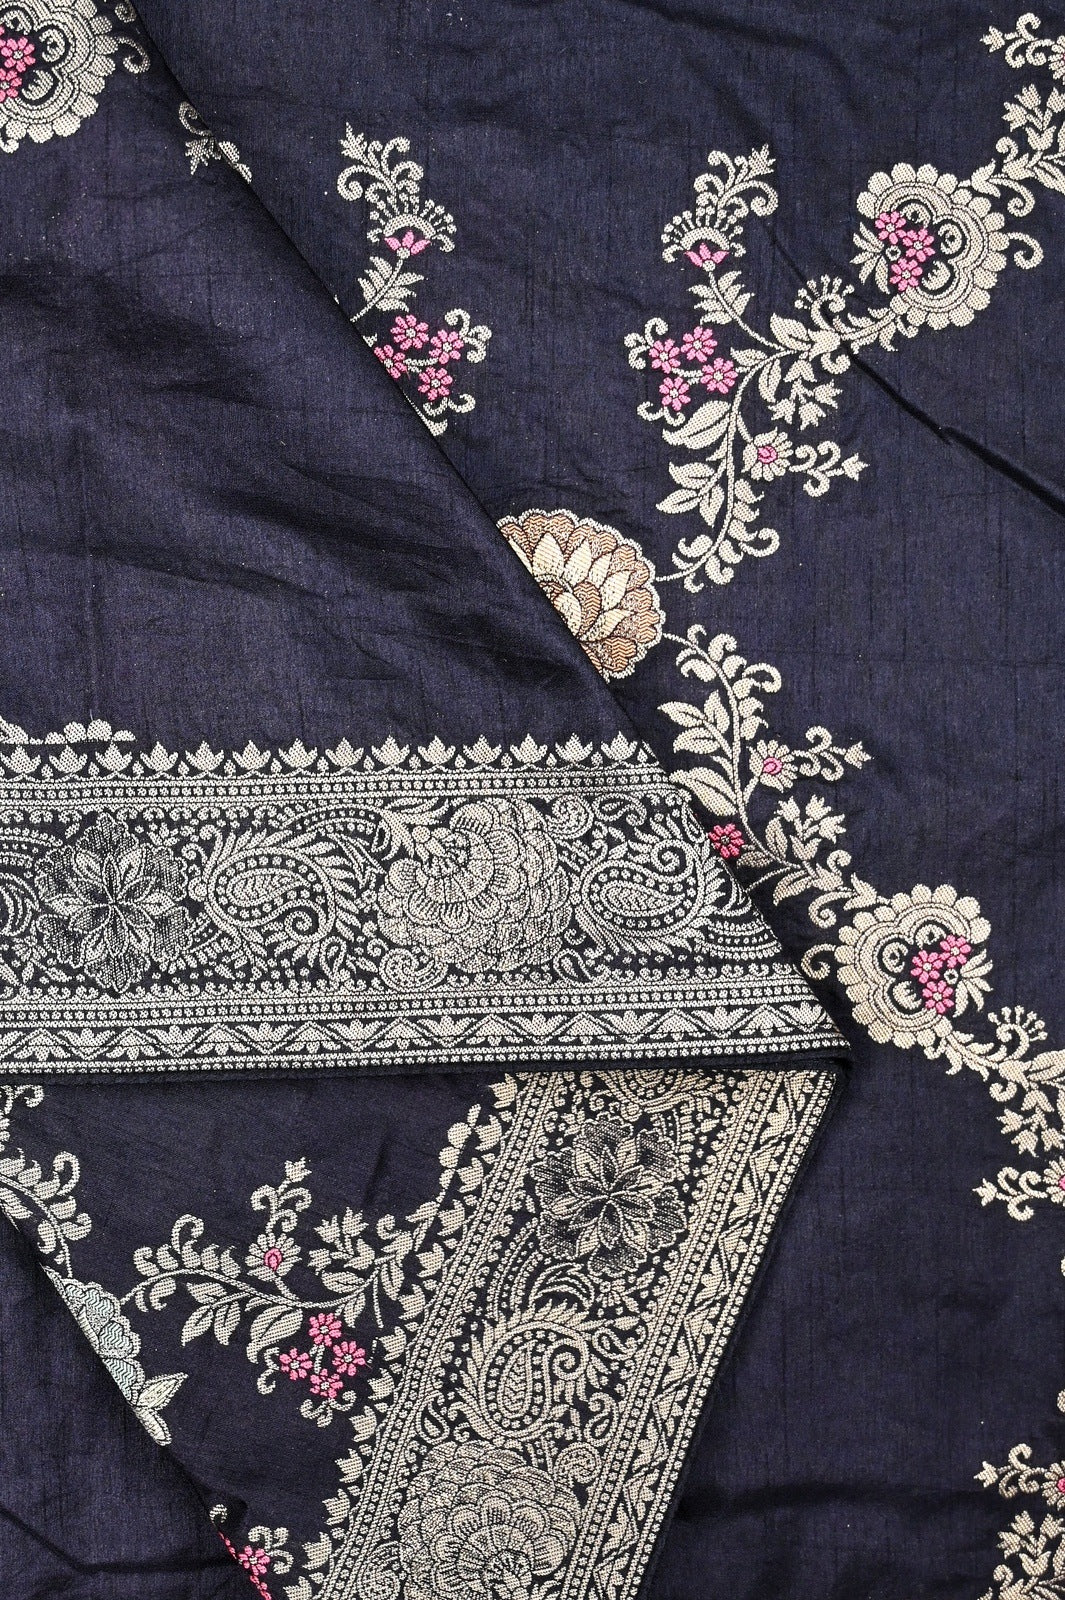 Dola silk saree black color with allover meenakari work, rich pallu, small zari border and running plain blouse.